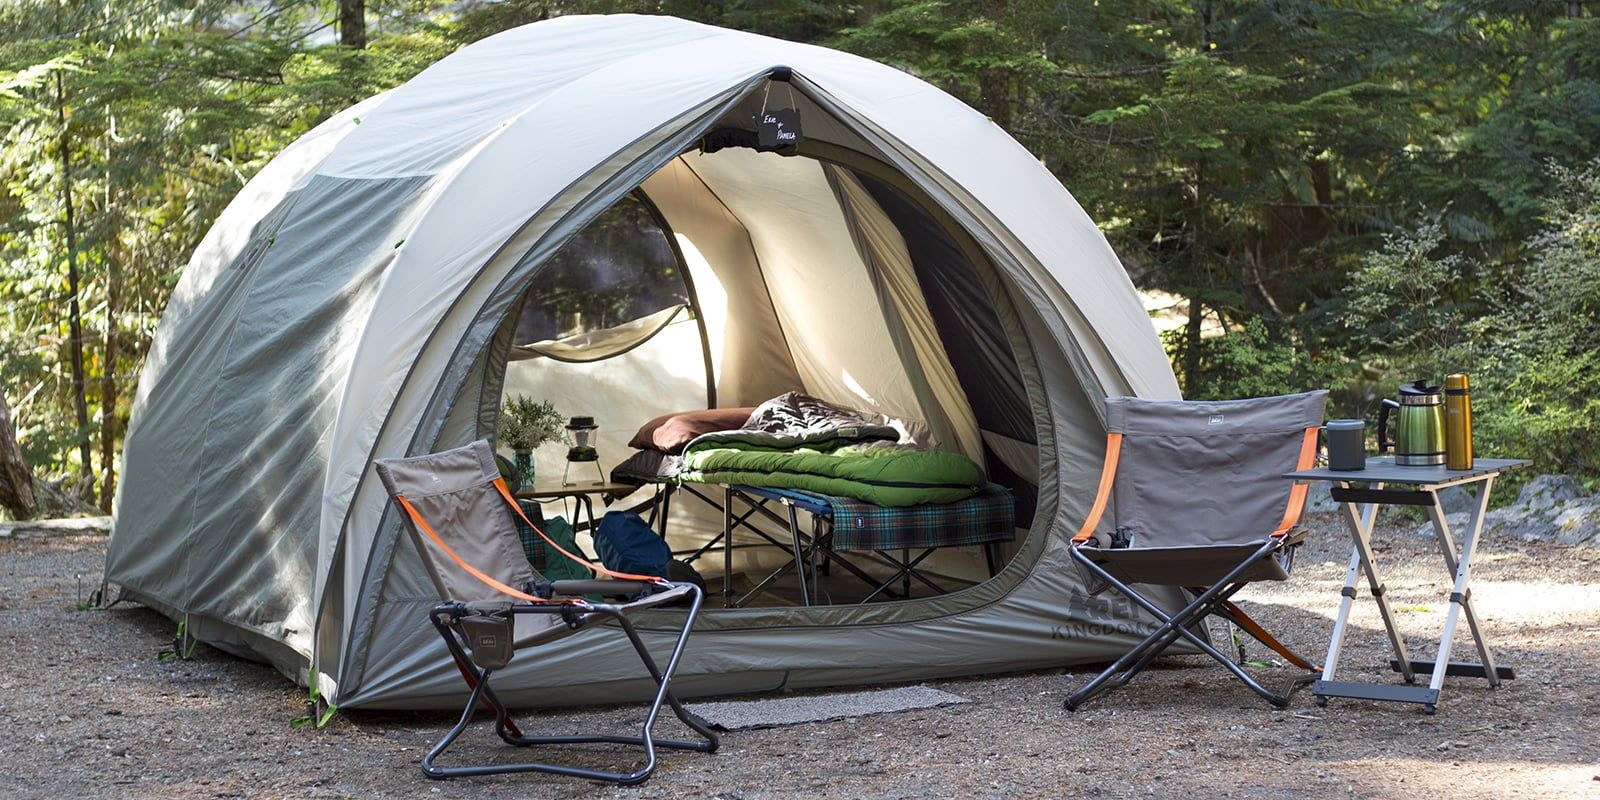 a campsite layout